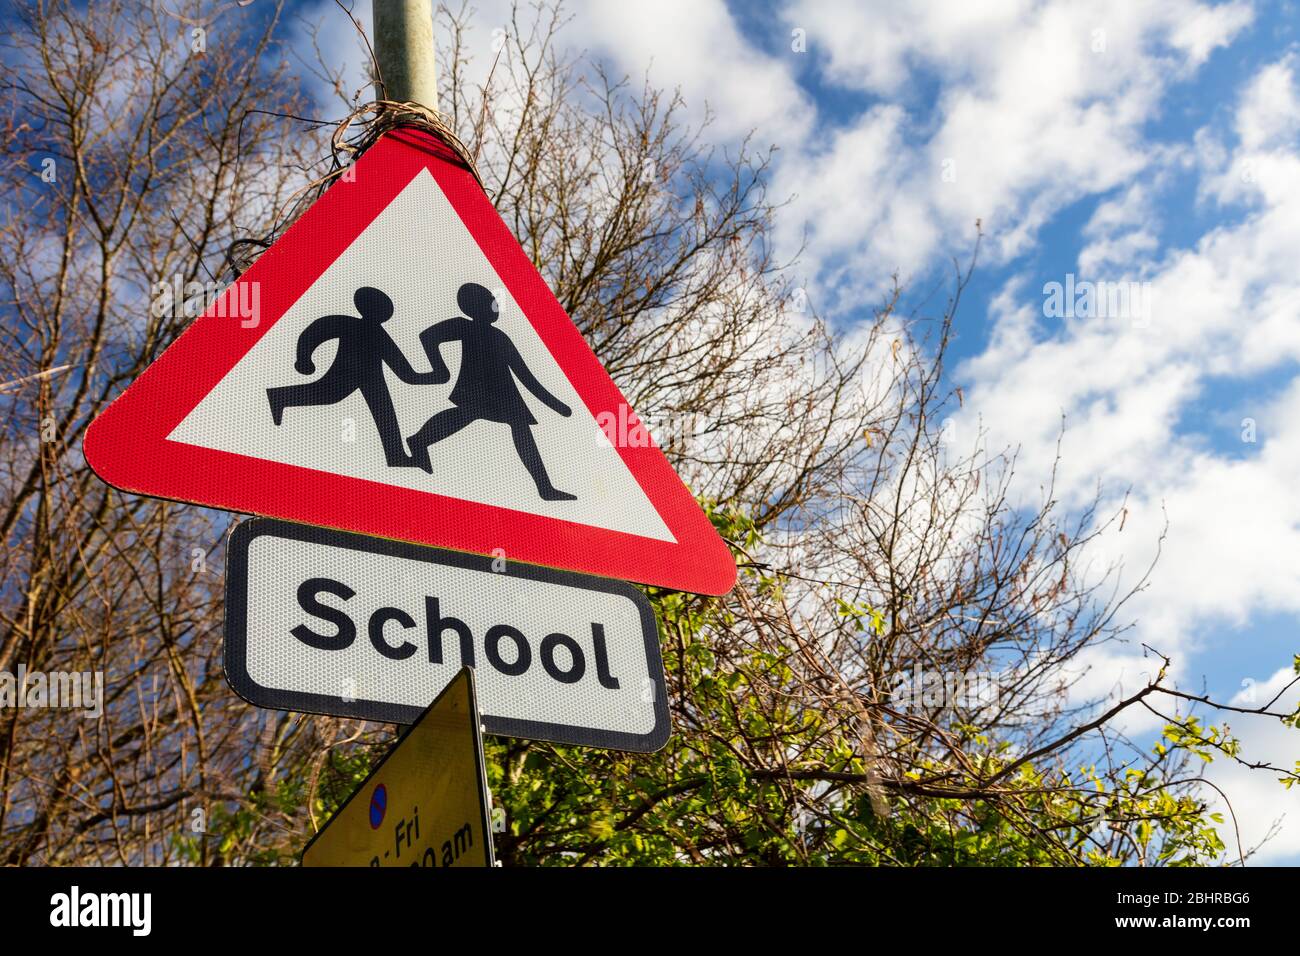 School warning road traffic sign Stock Photo